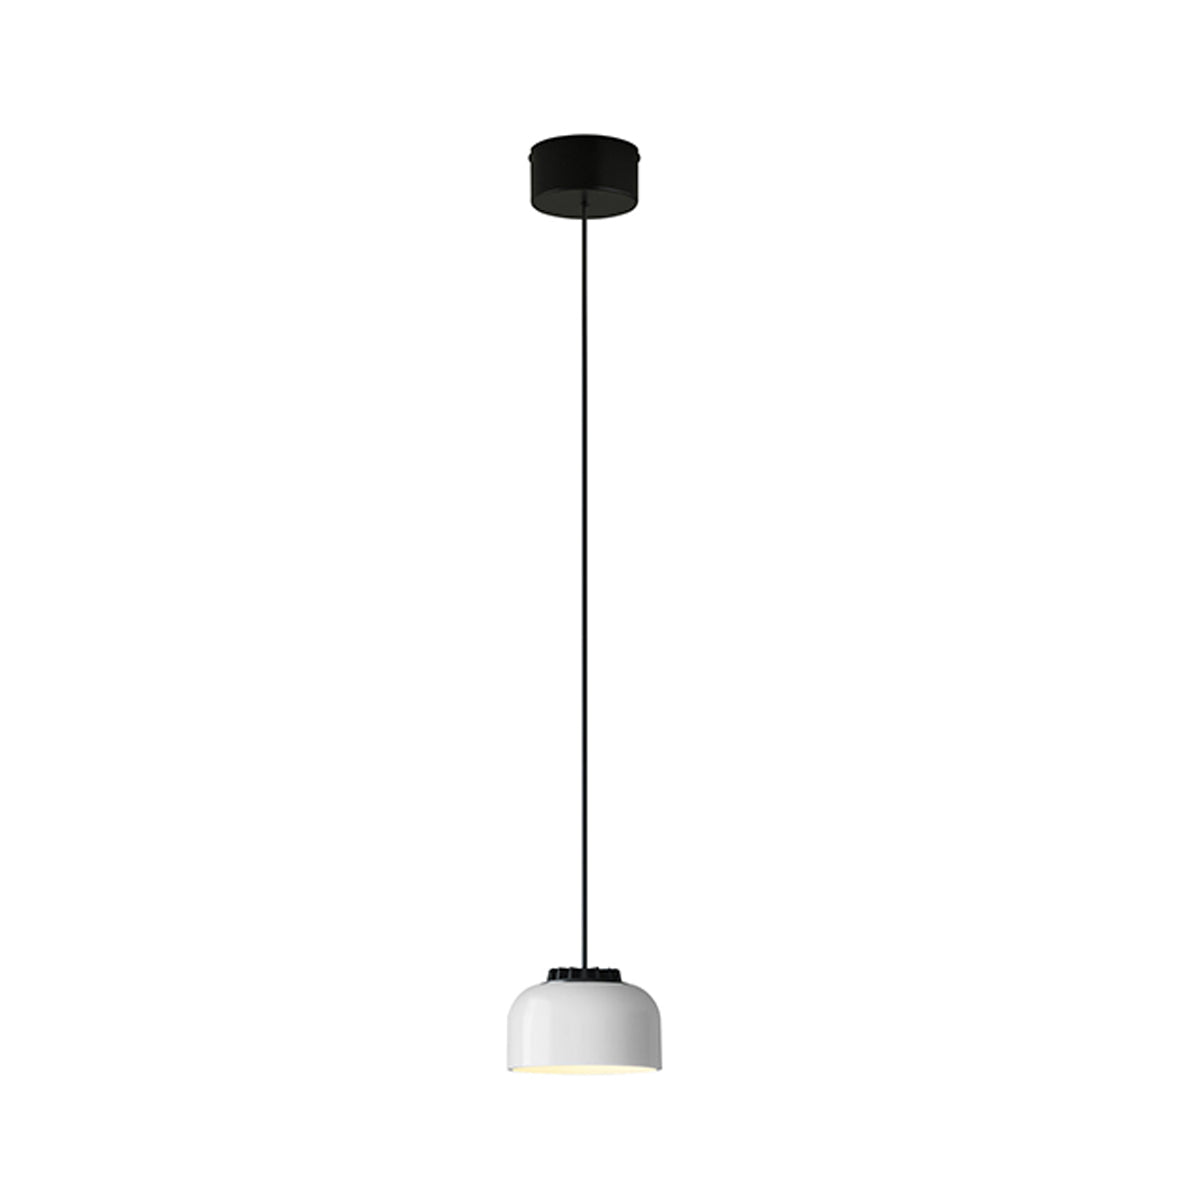 HeadHat Bowl Pendant Lamp: Small - 5.5